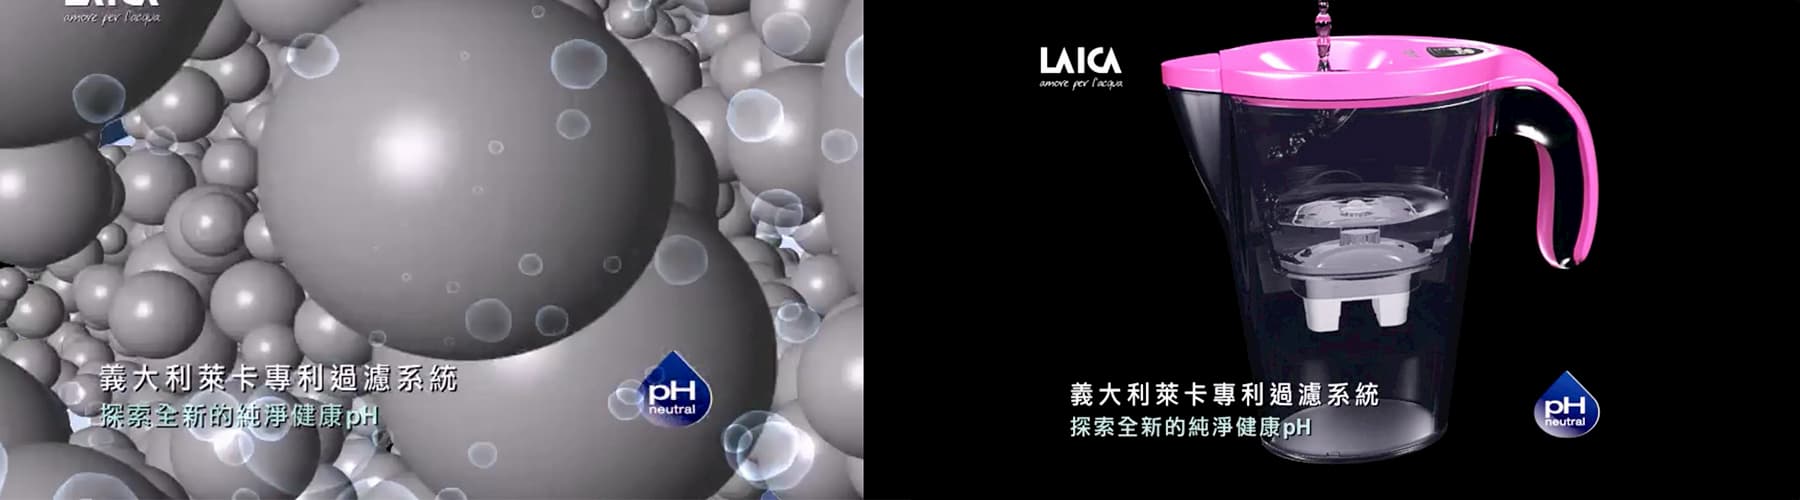 LAICA濾水壺 3D動畫影片-2